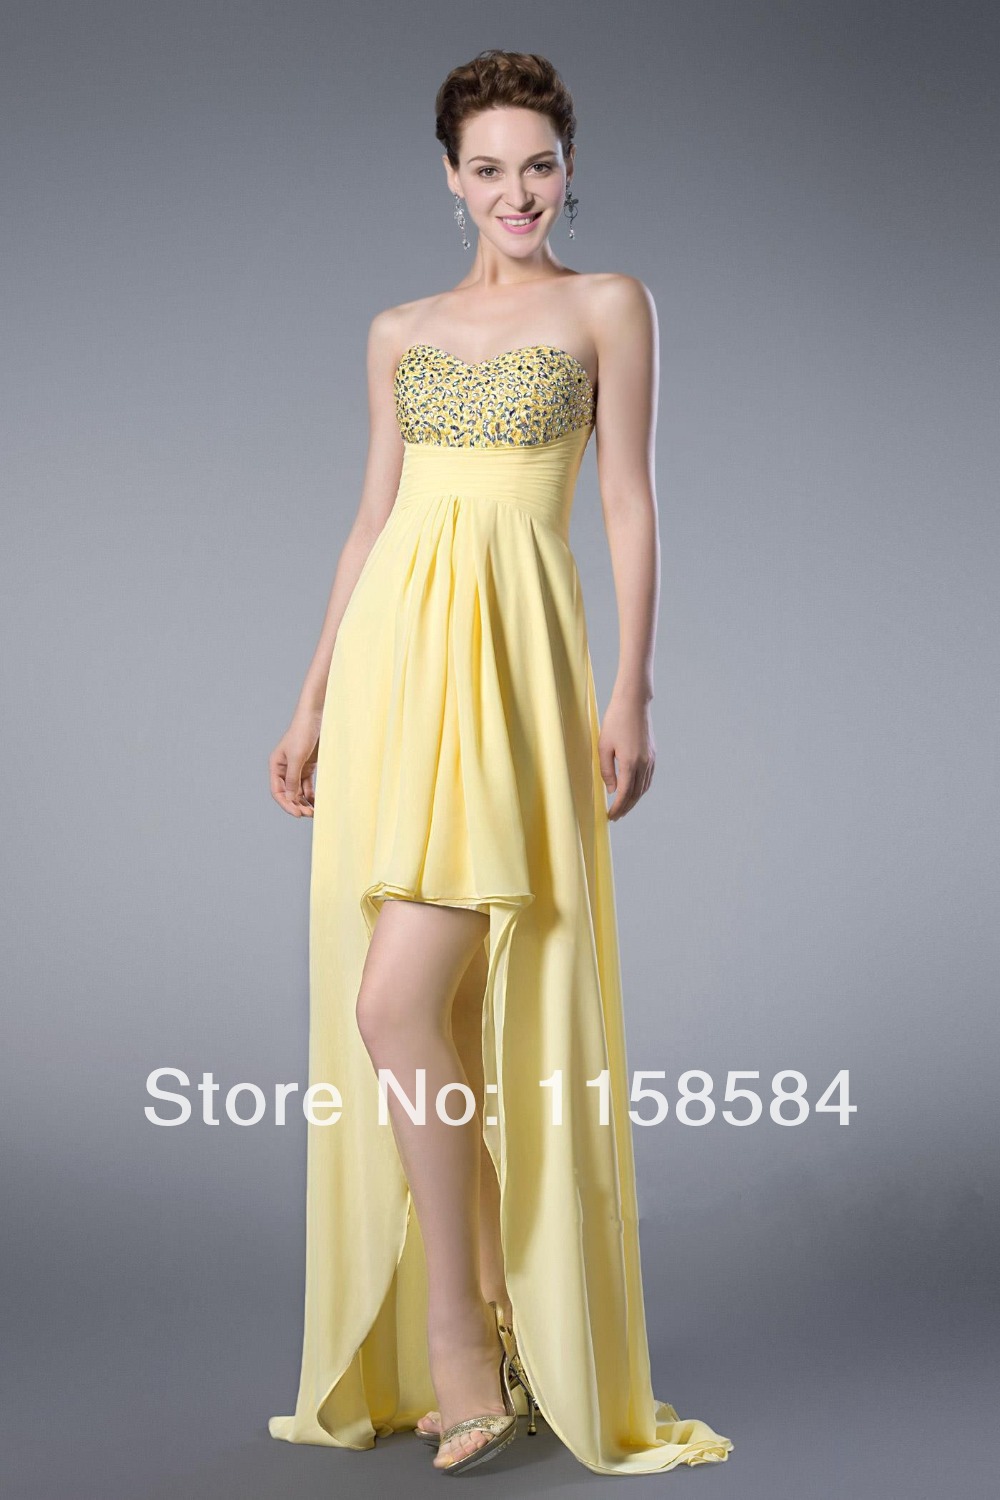 Prom Dress Shops In Austin Texas - Ocodea.com